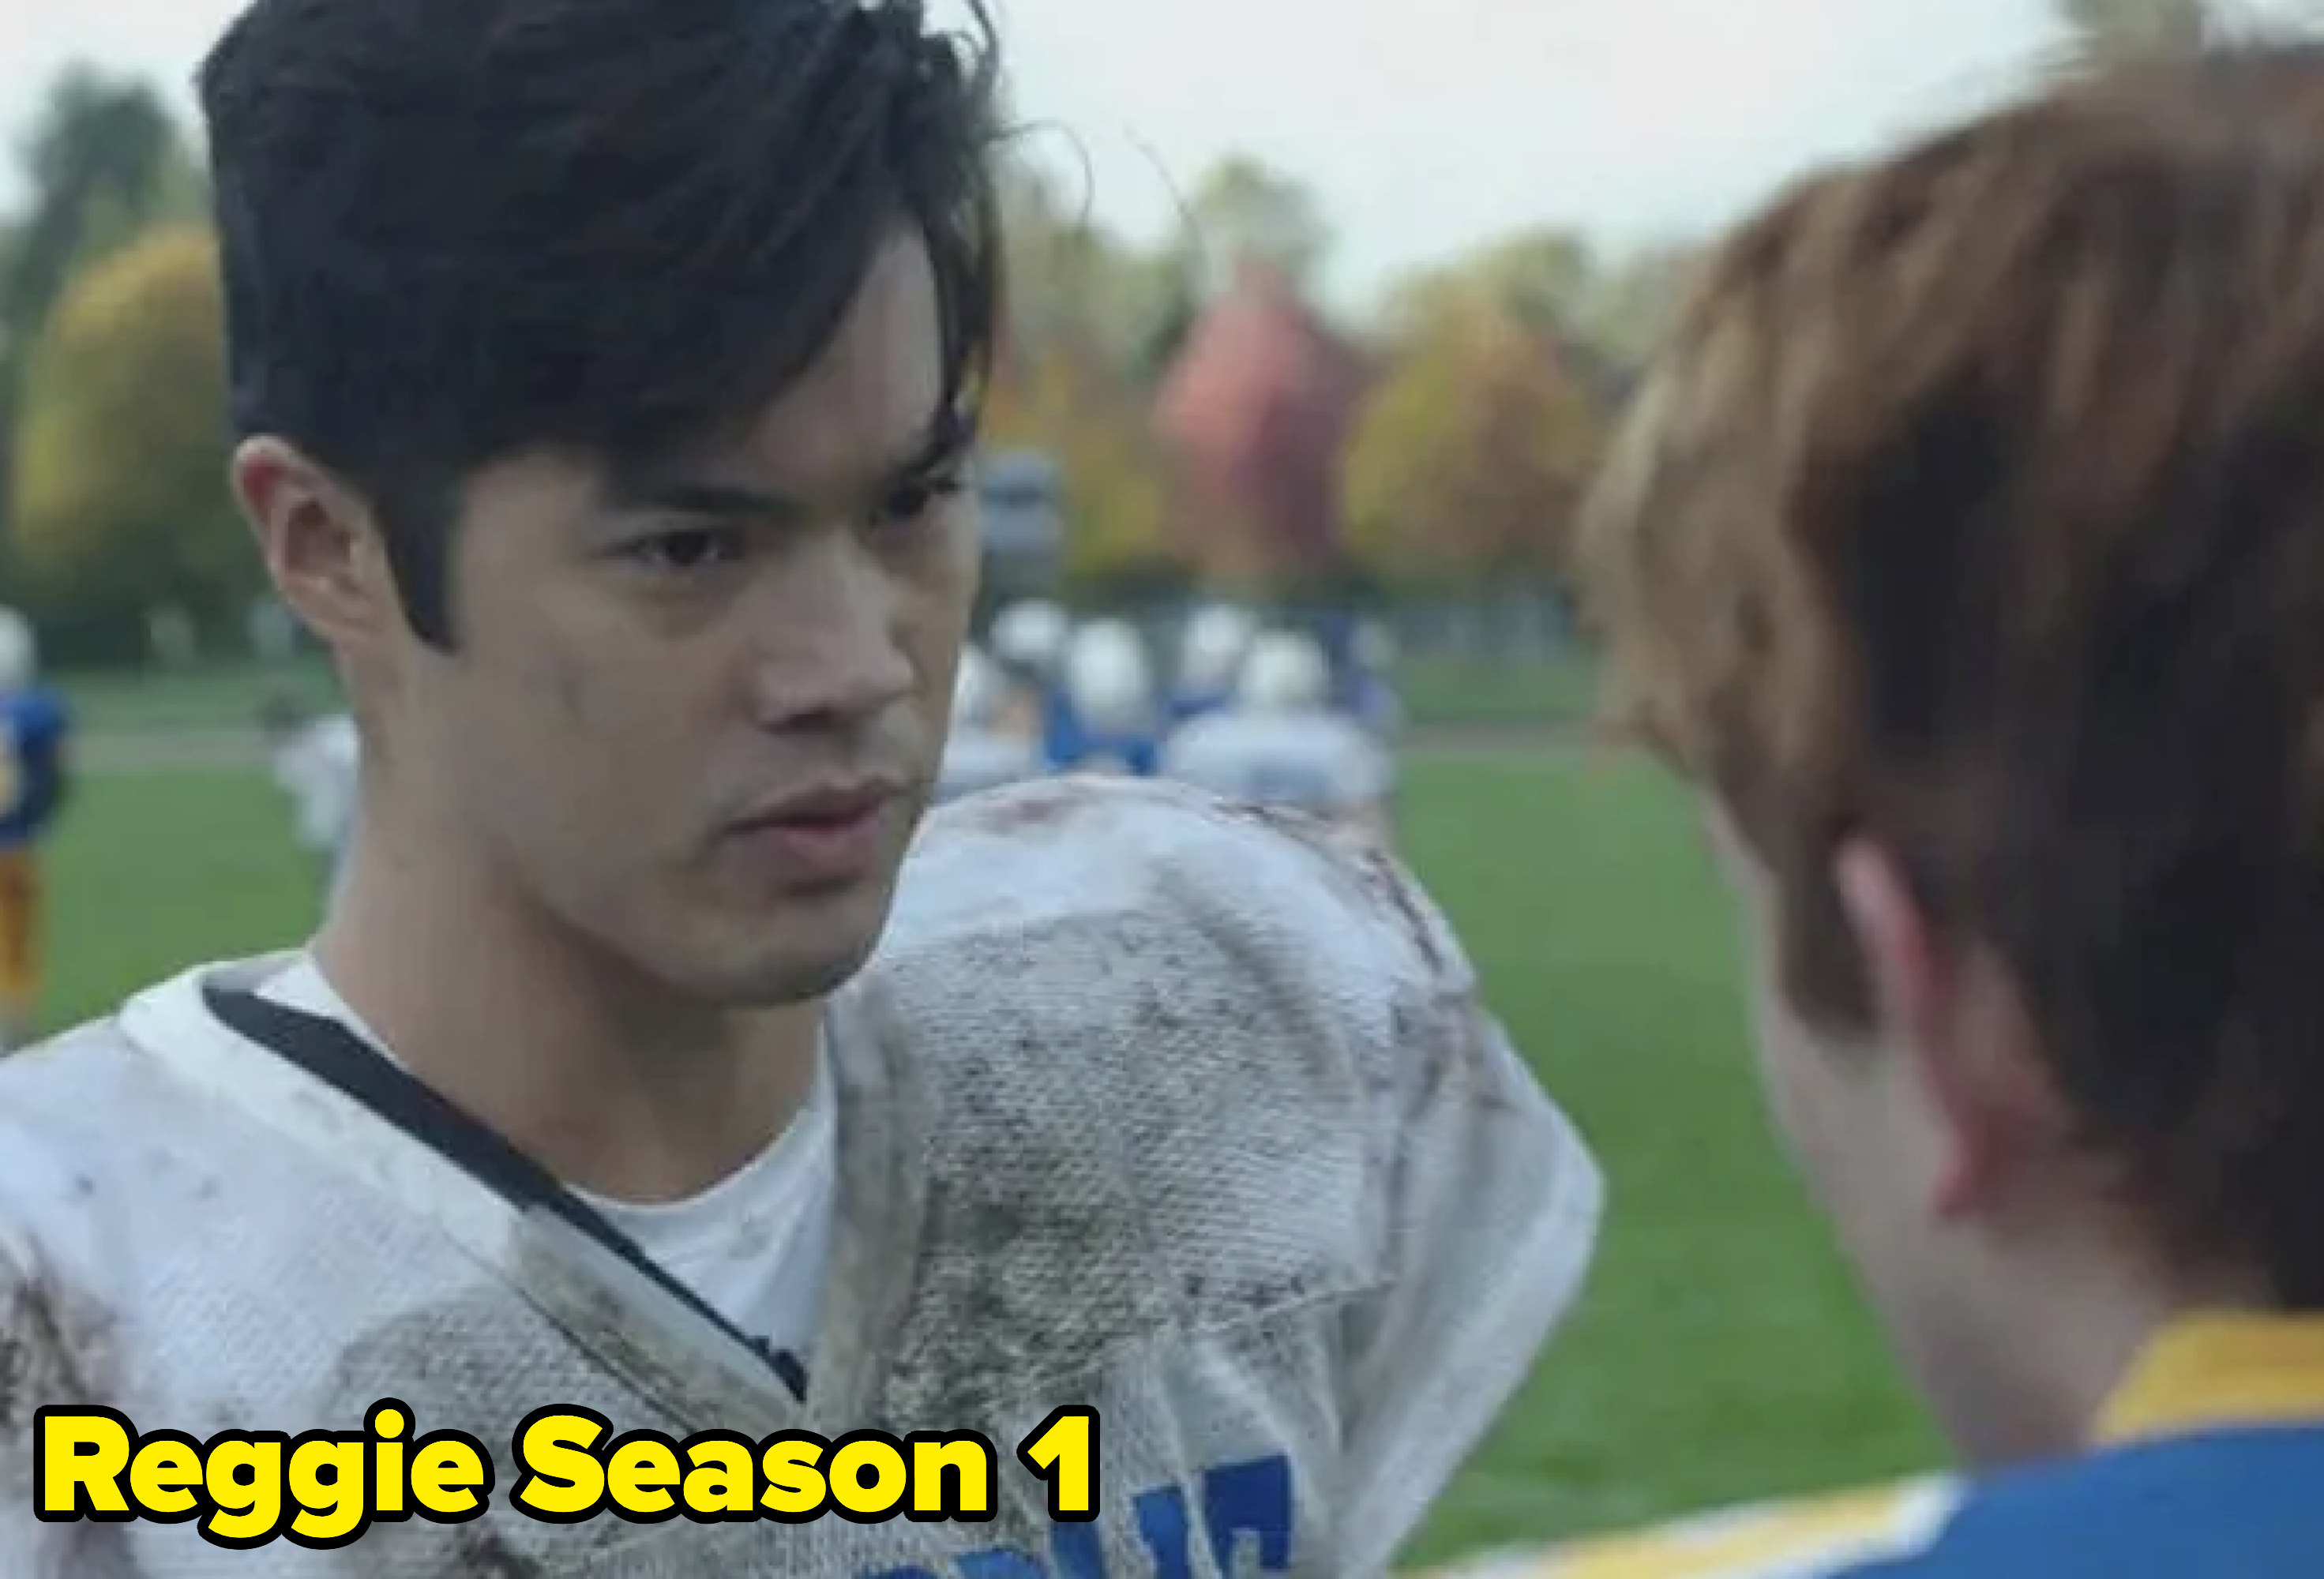 Reggie in a football uniform during a scene